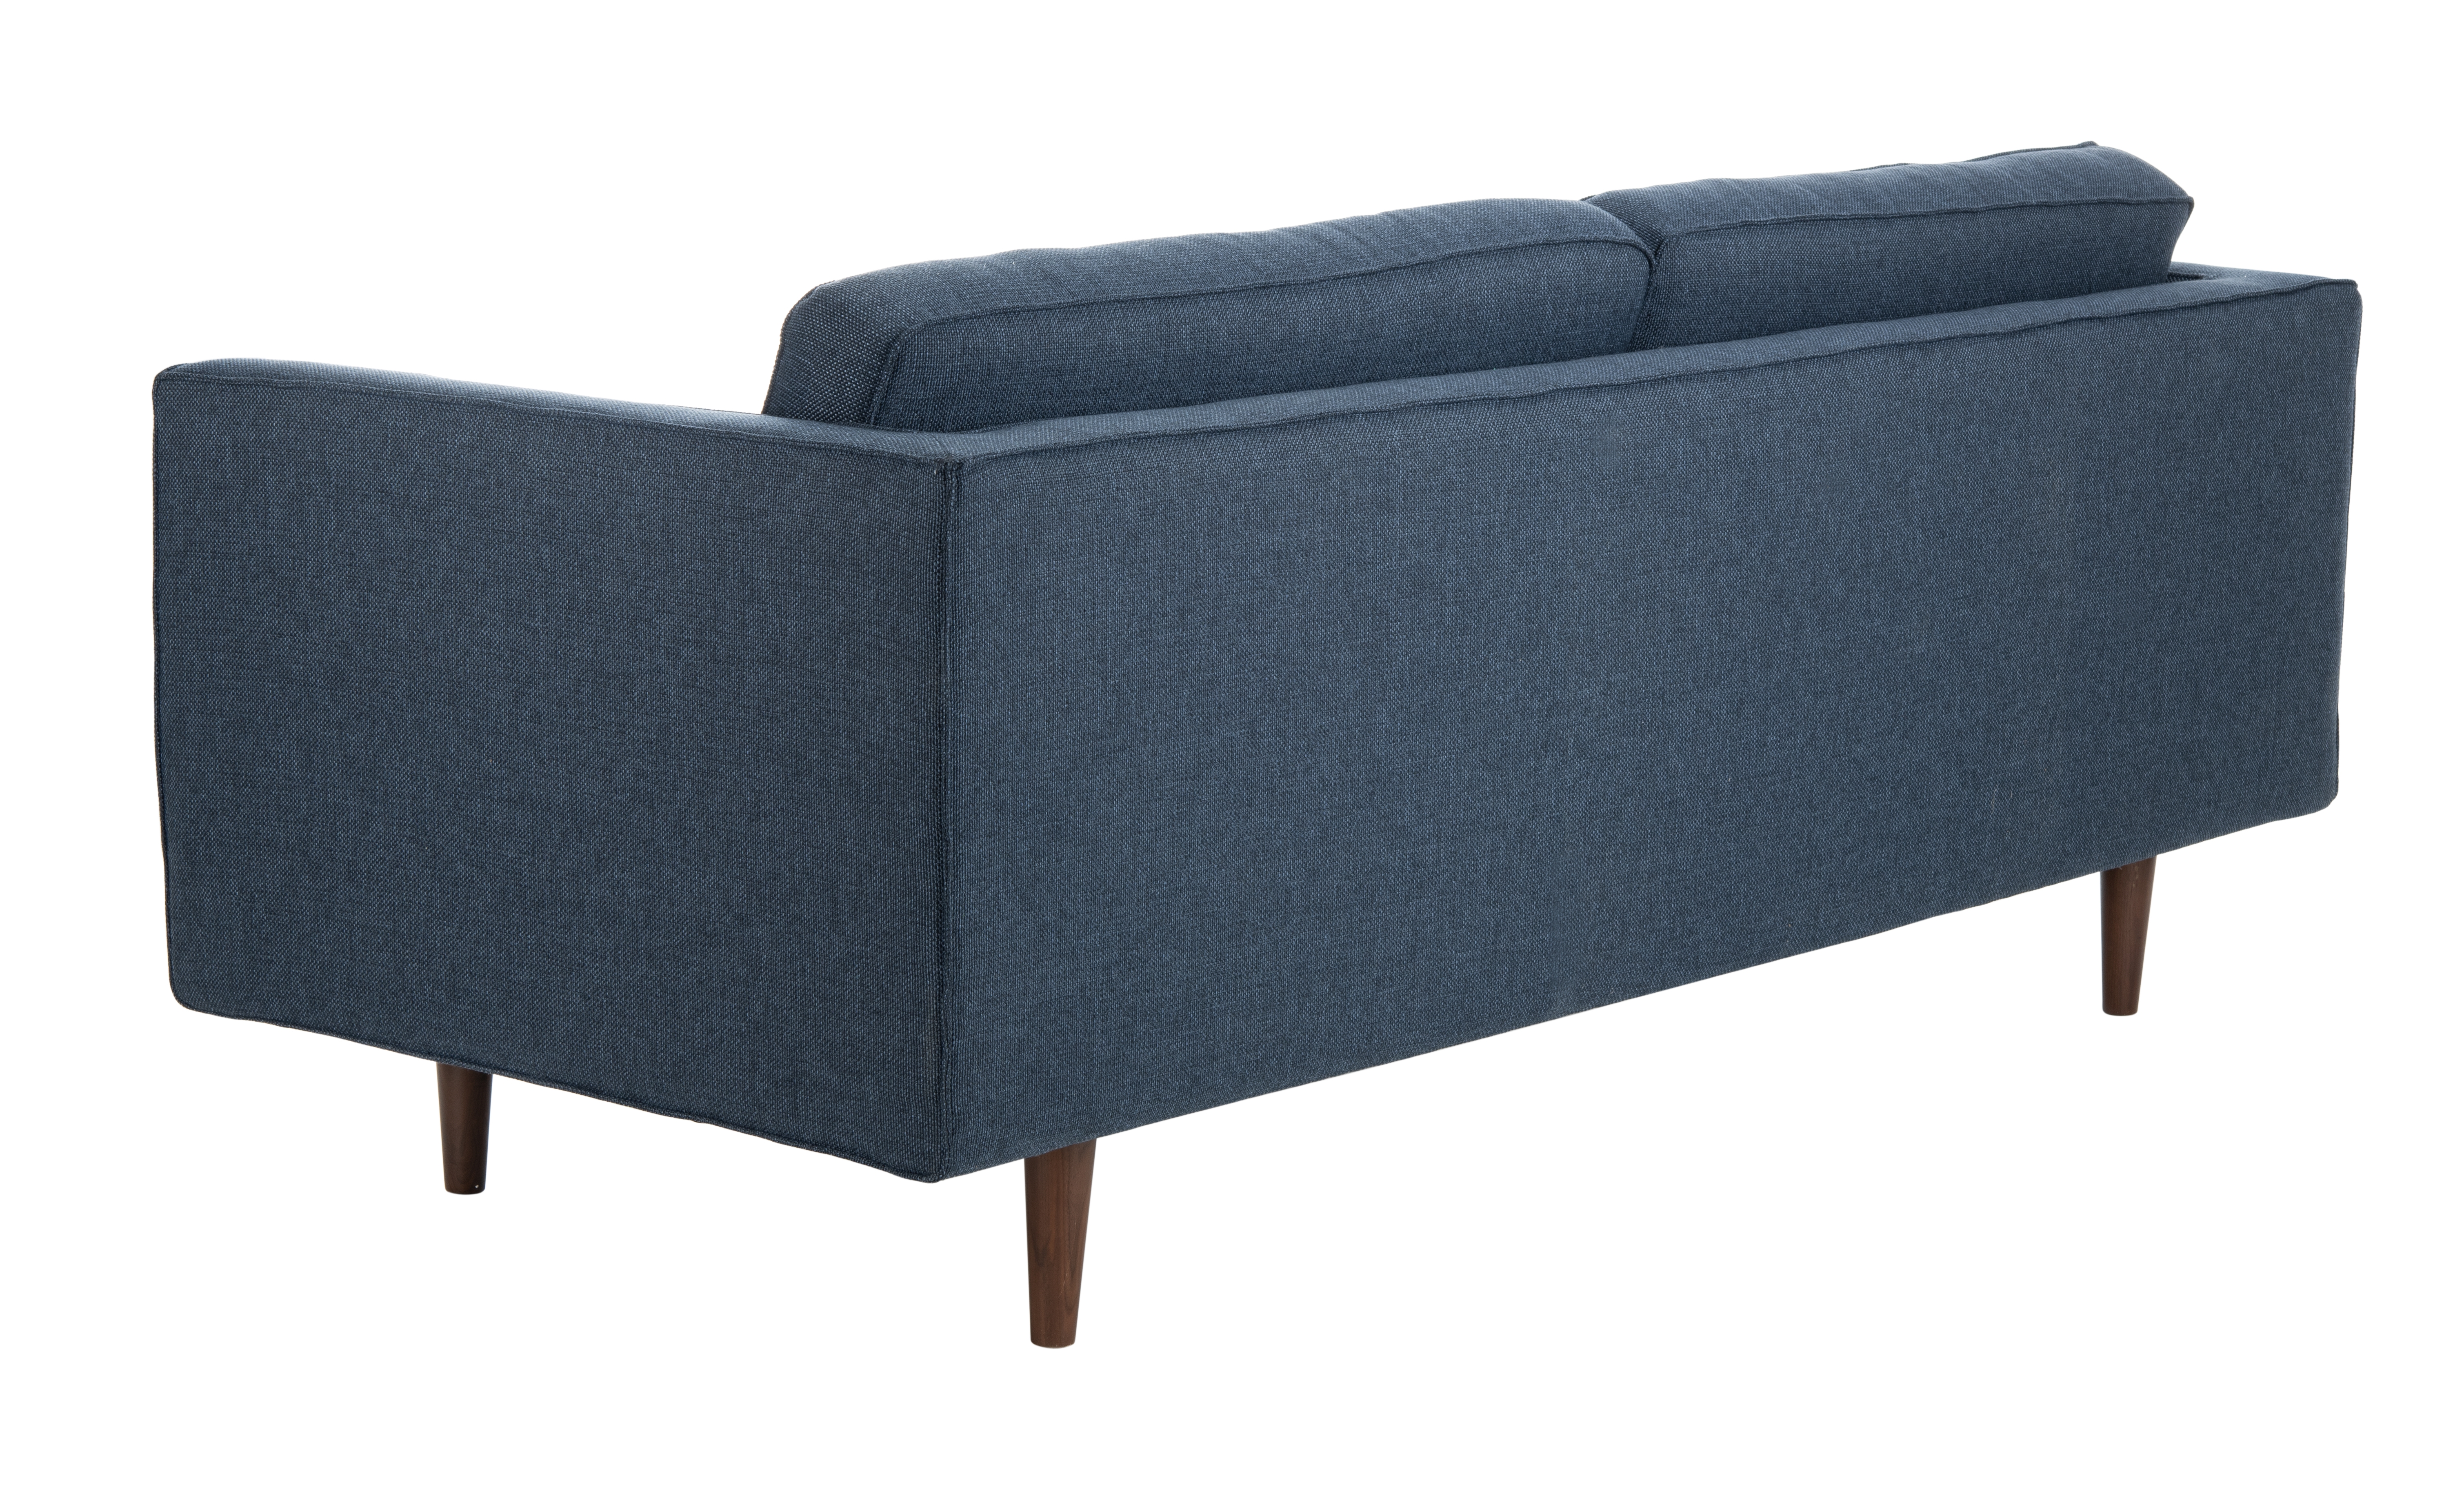 Hurley Mid Century Sofa - Dark Blue - Arlo Home - Image 3